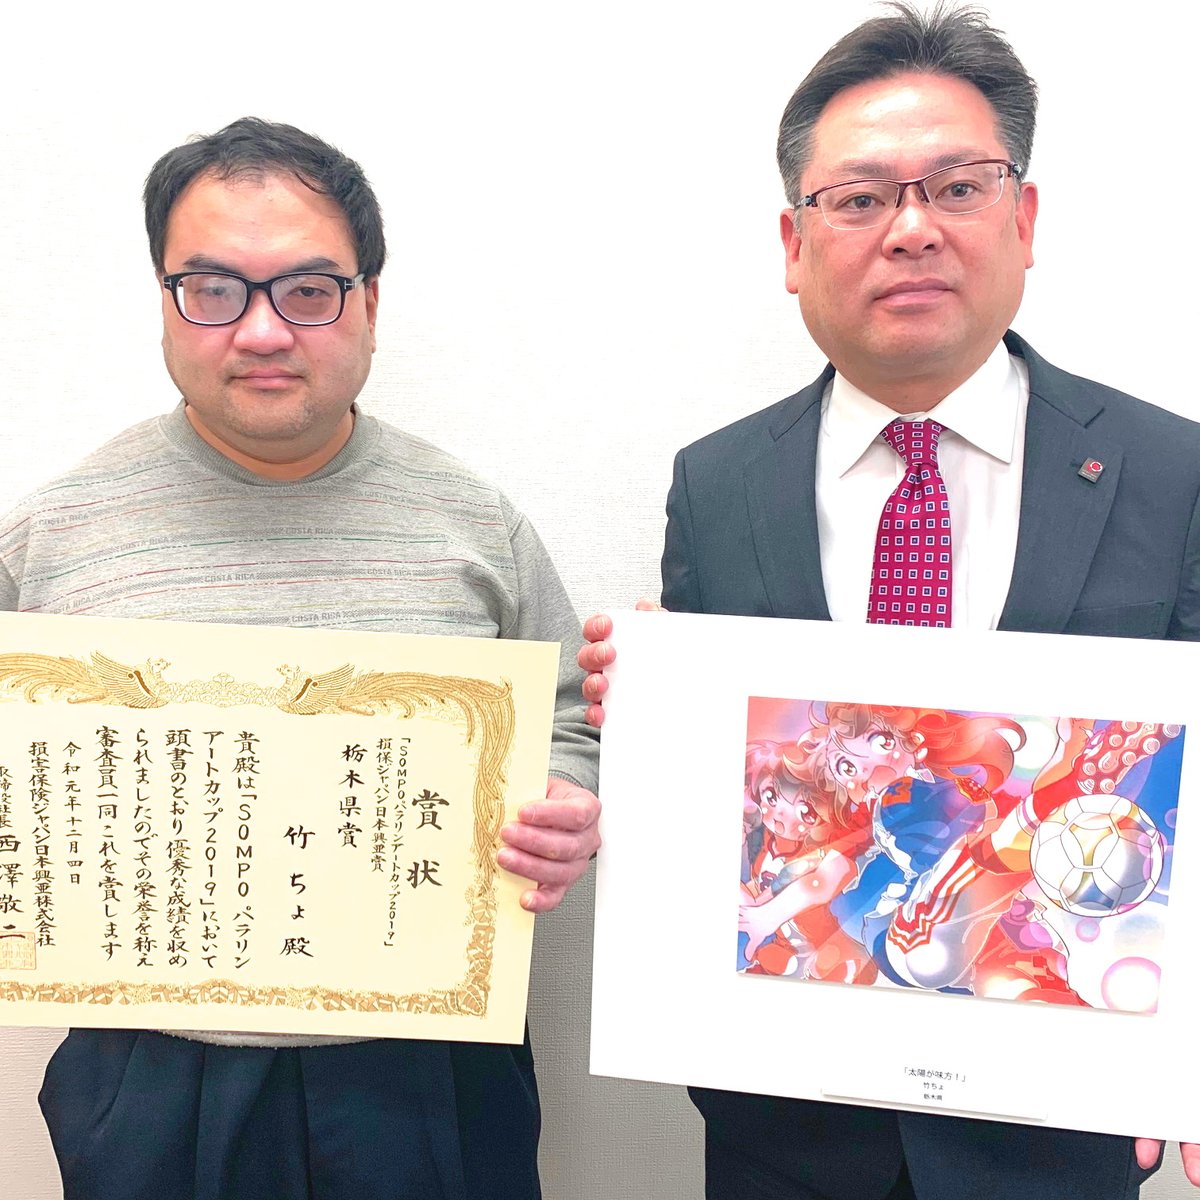 @8zXMA2iNexLSSzk 栃木県の方では、今年2月に損保ジャパン日本興亜栃木支店で、賞状とパネルの贈呈式が行われて、地元の下野新聞に掲載されました♪(*^▽^*) 